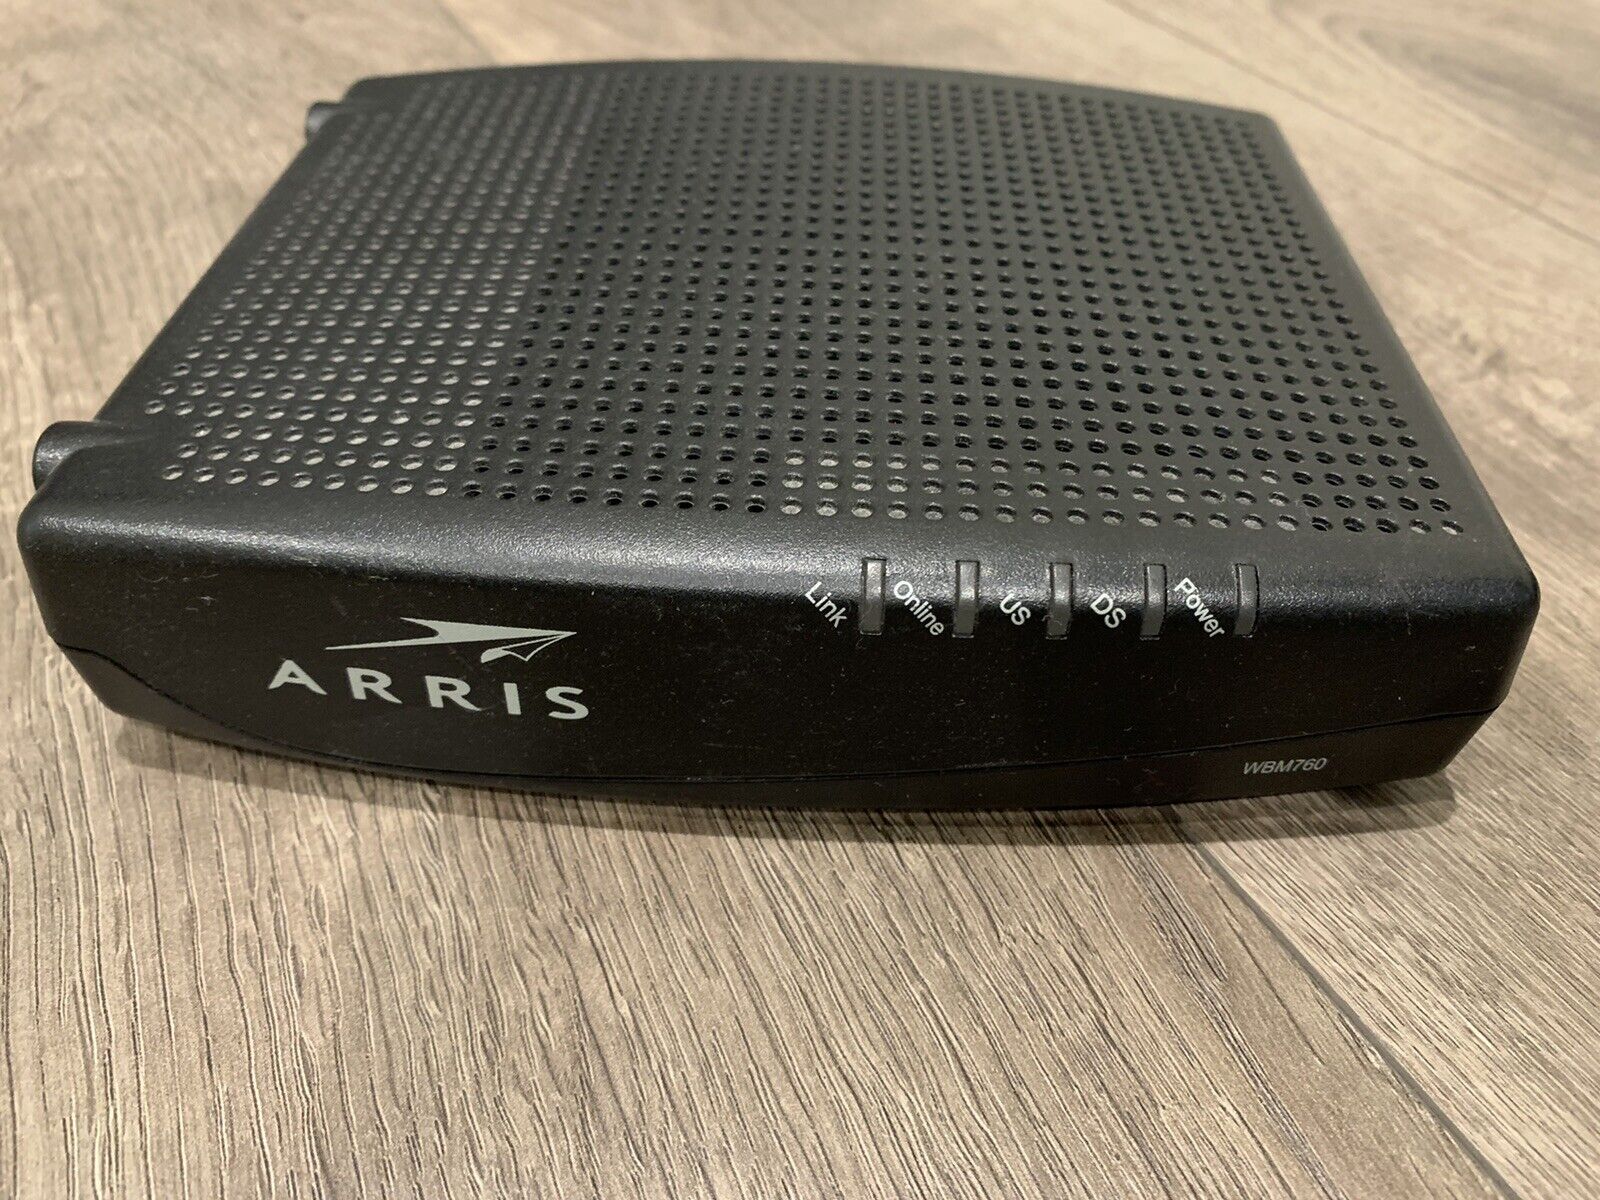 ARRIS Touchstone WBM760A (780145) 163.84 Mbps